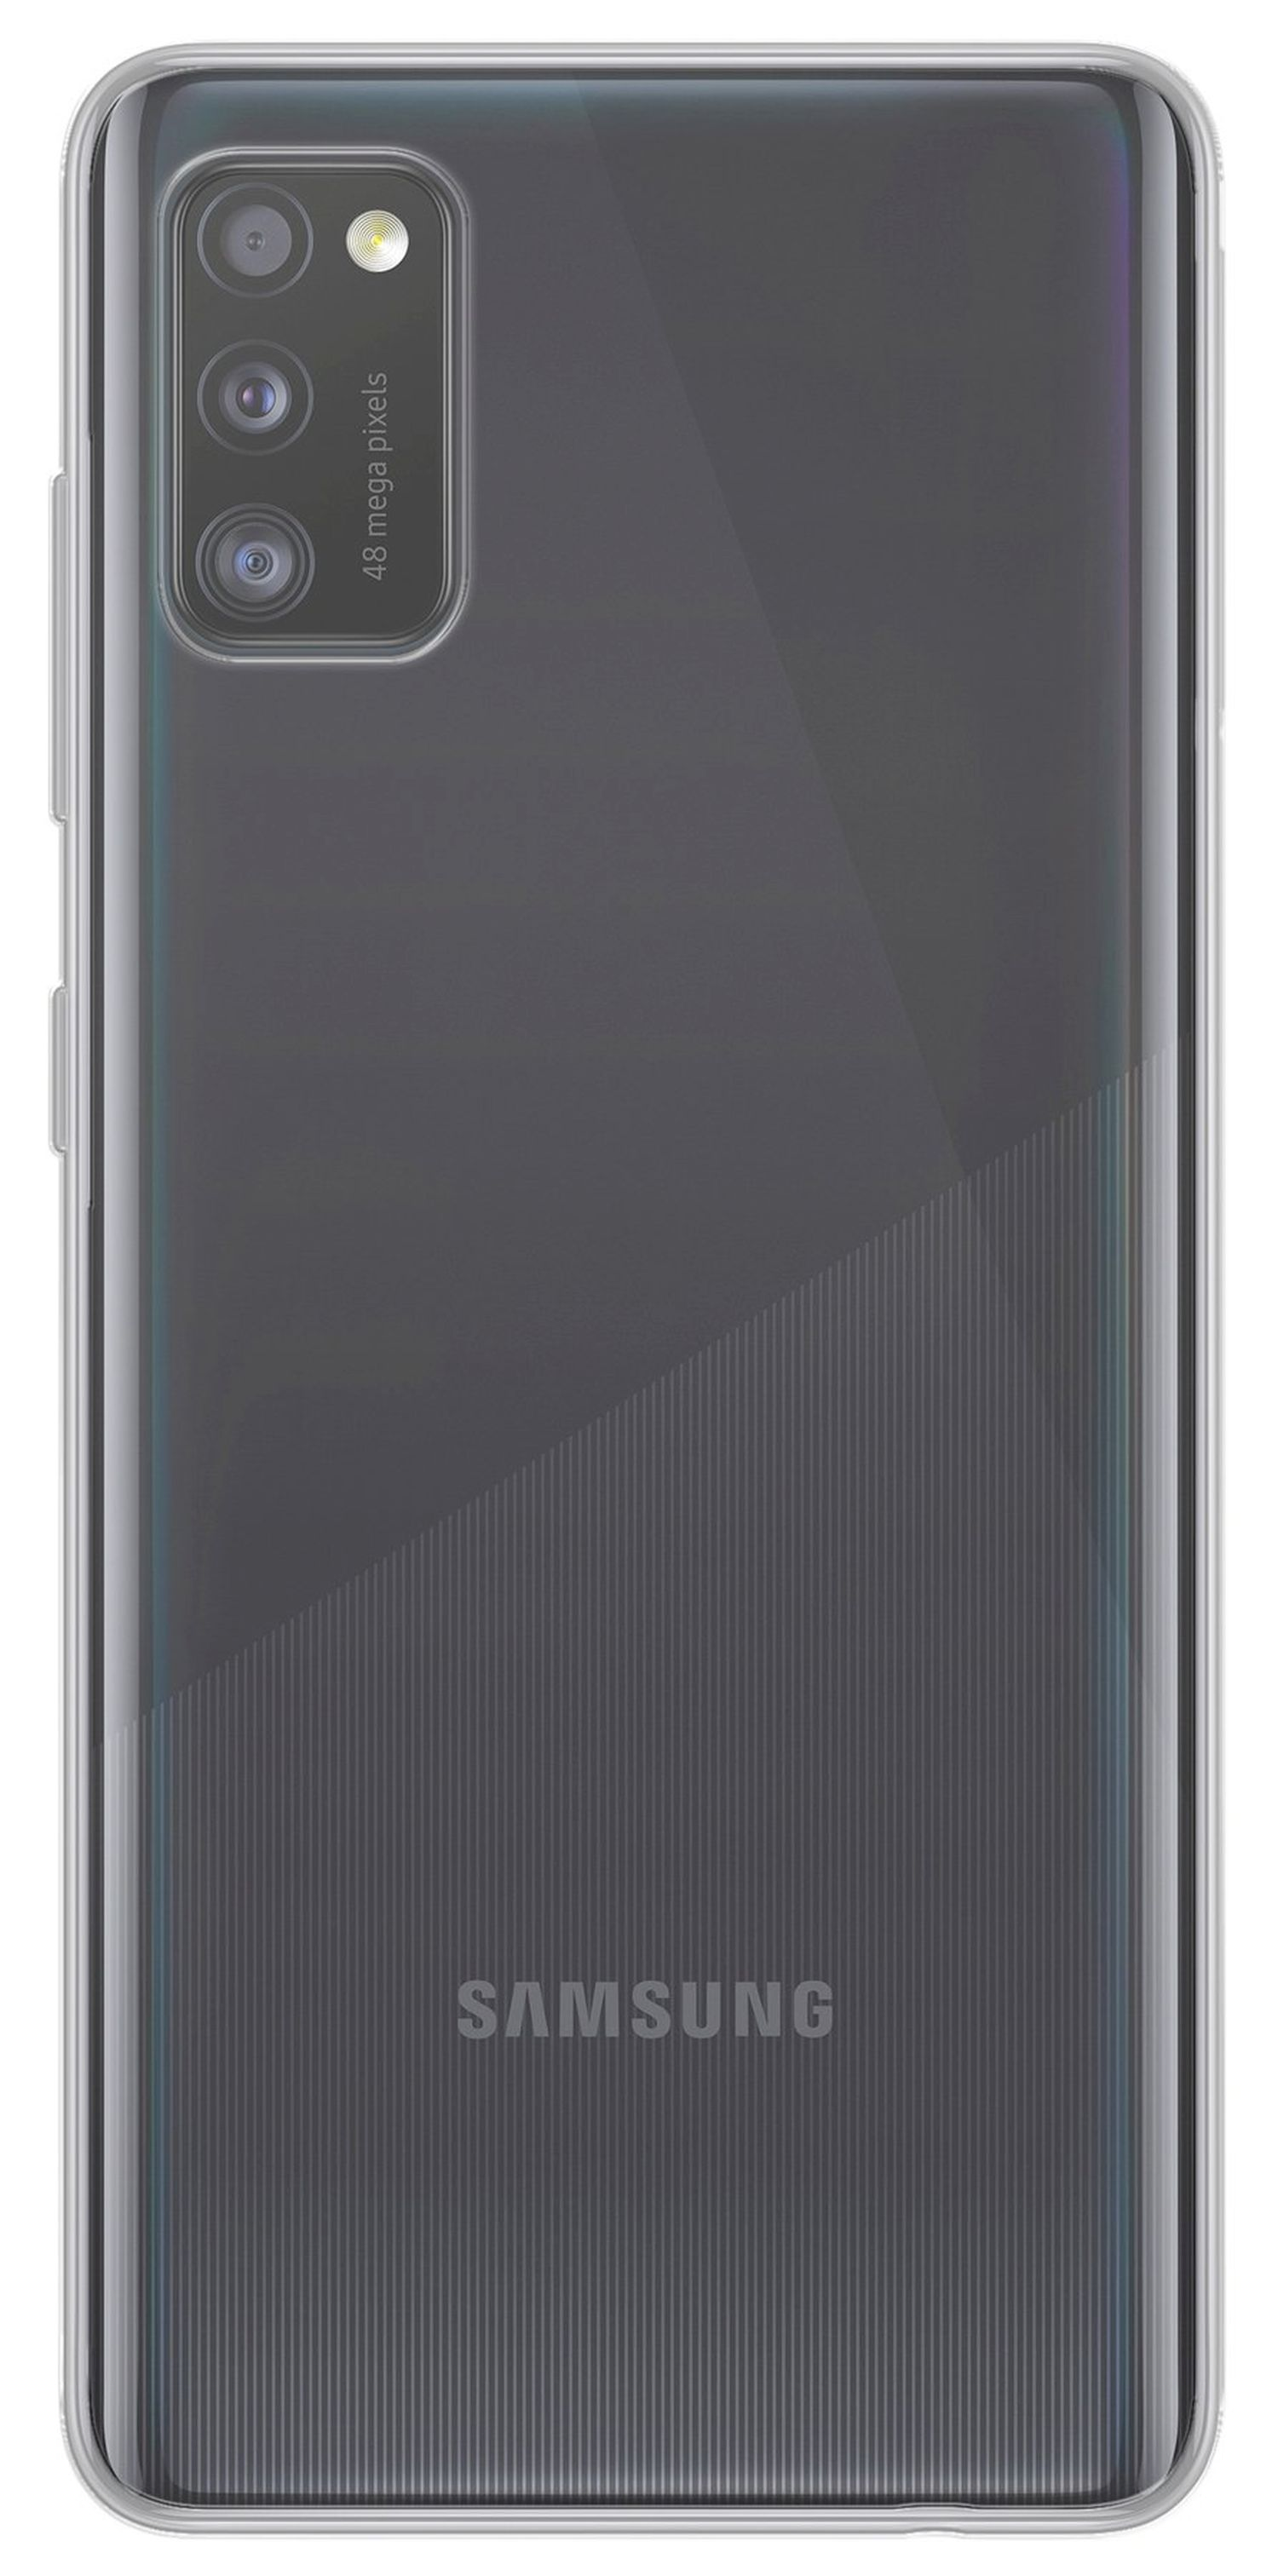 COFI Basic Cover, Transparent A41, Galaxy Samsung, Bumper